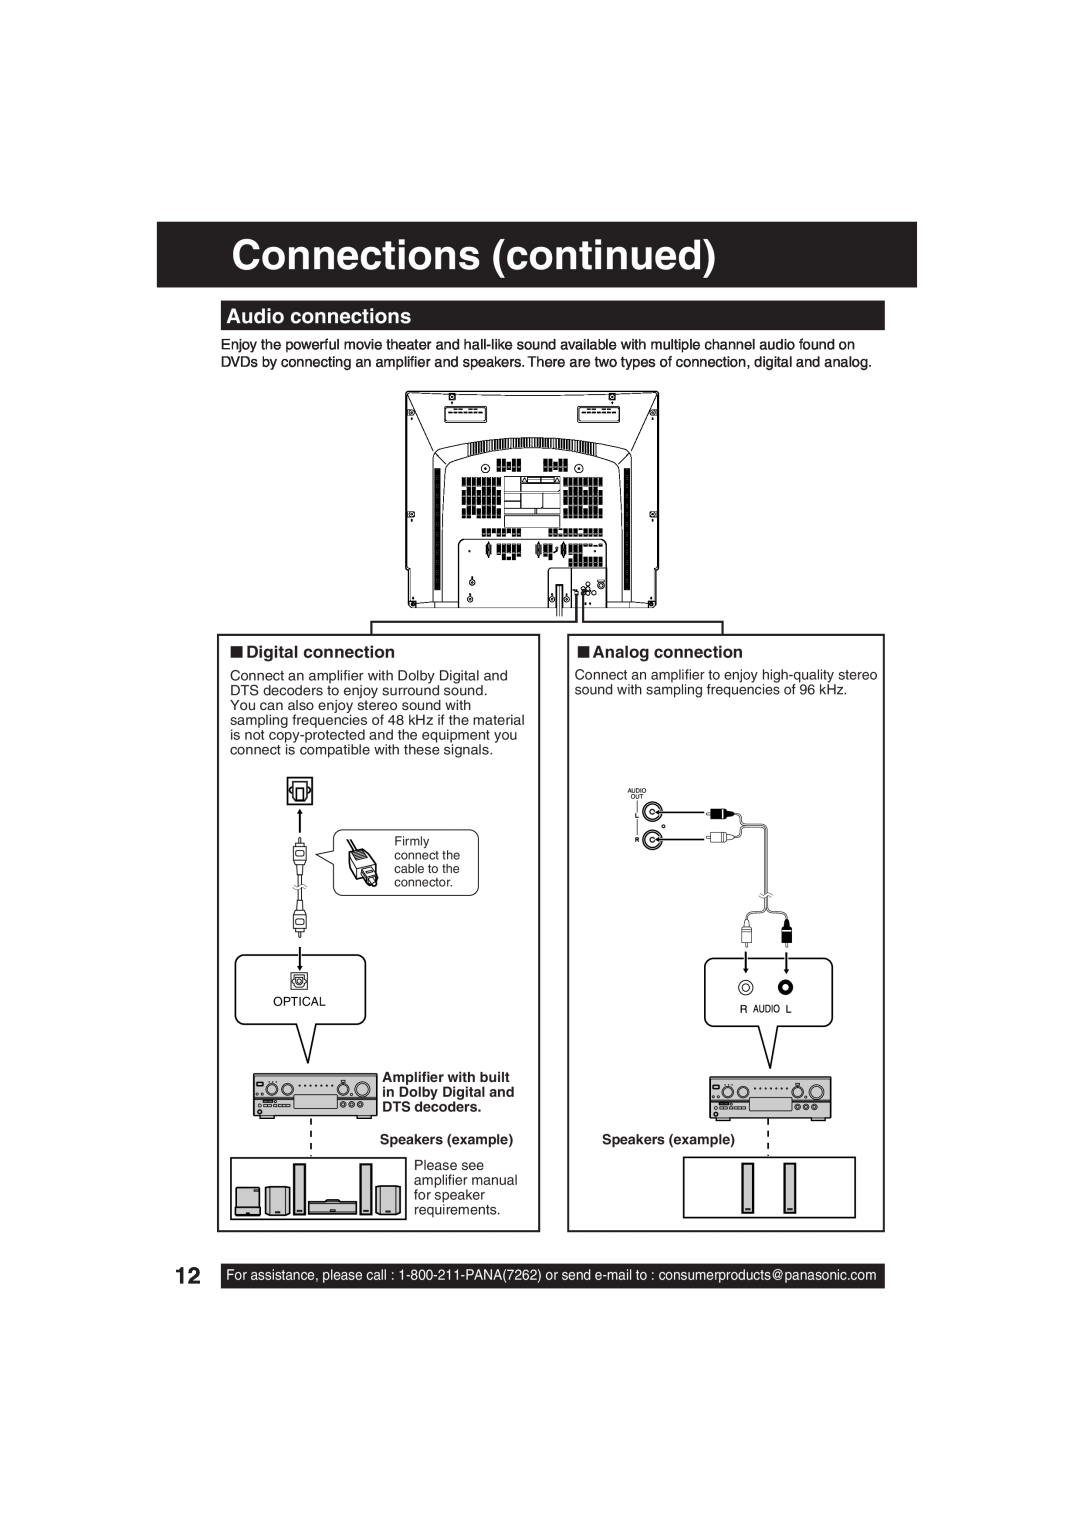 Panasonic PV-DF203, PV-DF273 manual Connections continued, Audio connections, Digital connection, Analog connection 